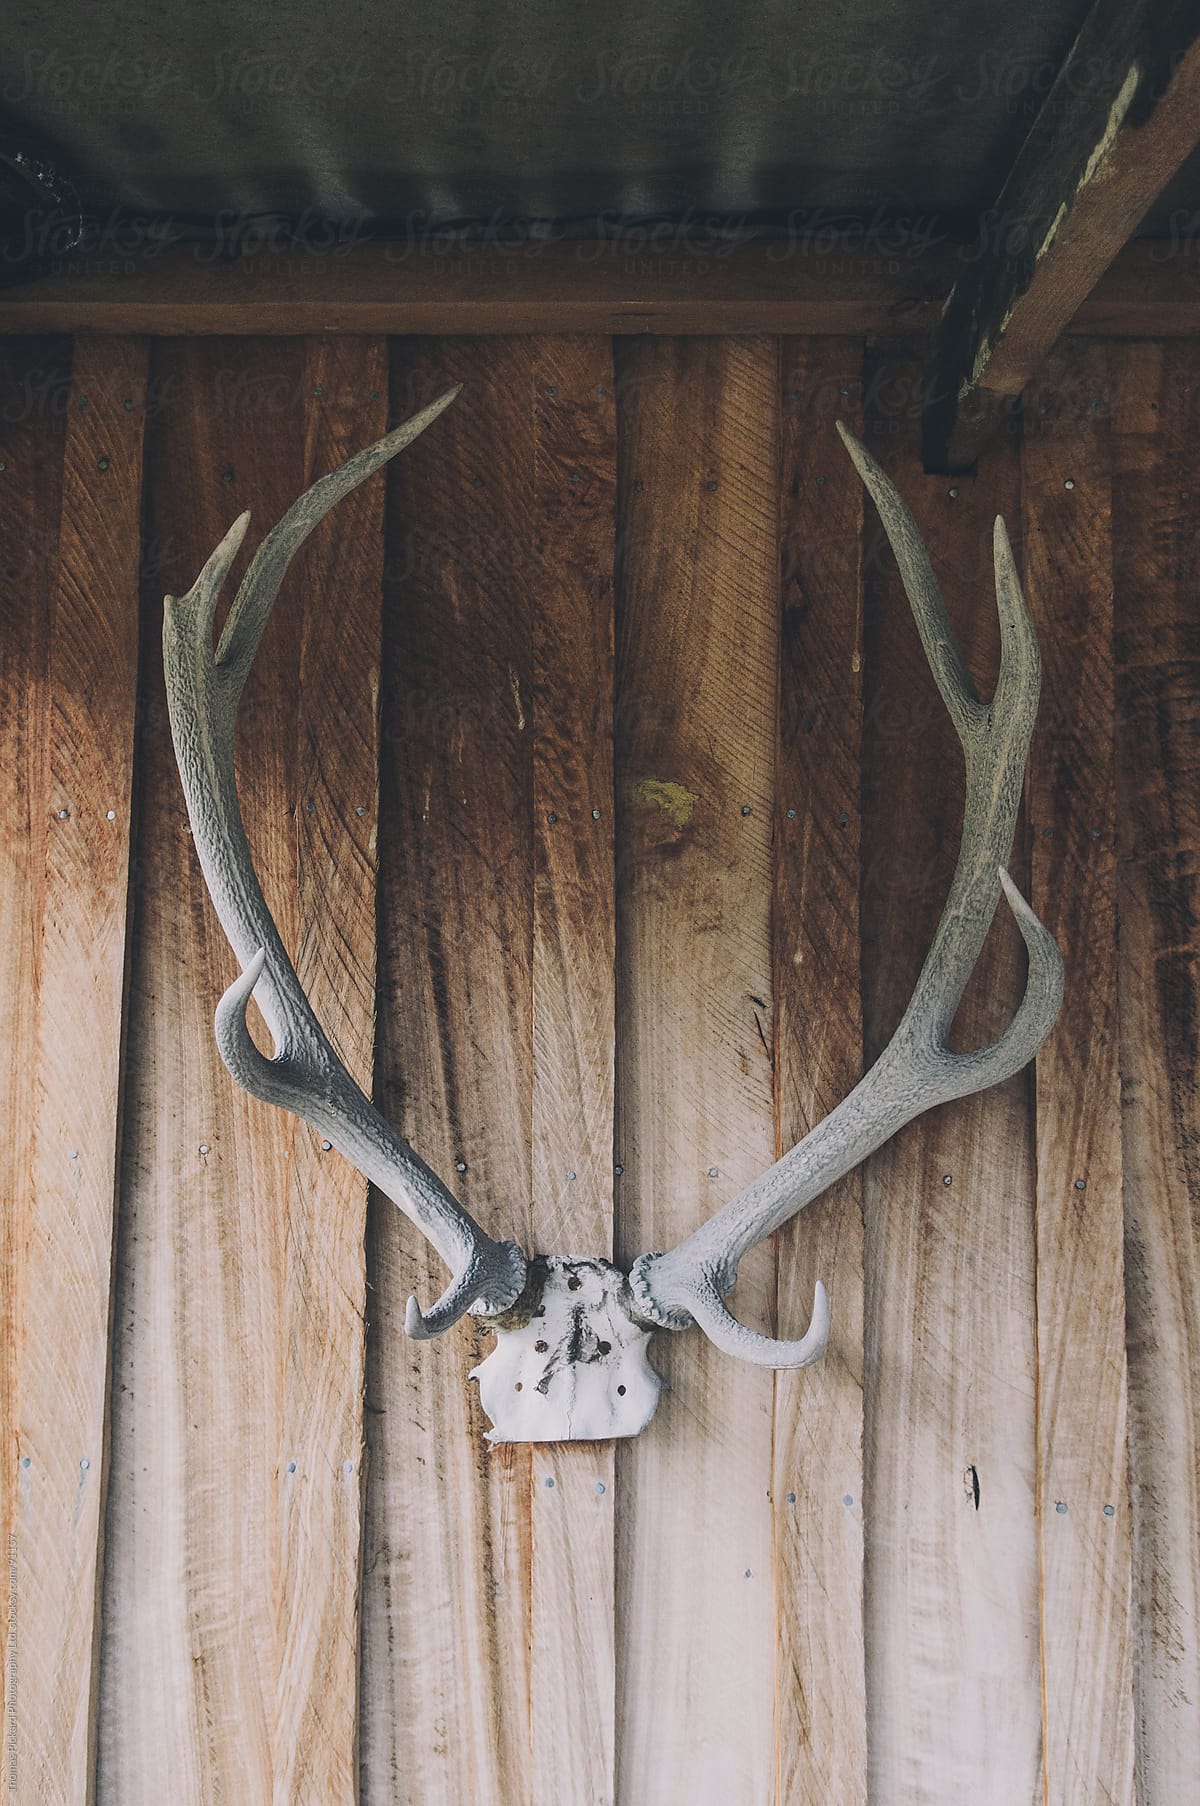 Deer horns on the ouside of a cabin / hut, New Zealand.